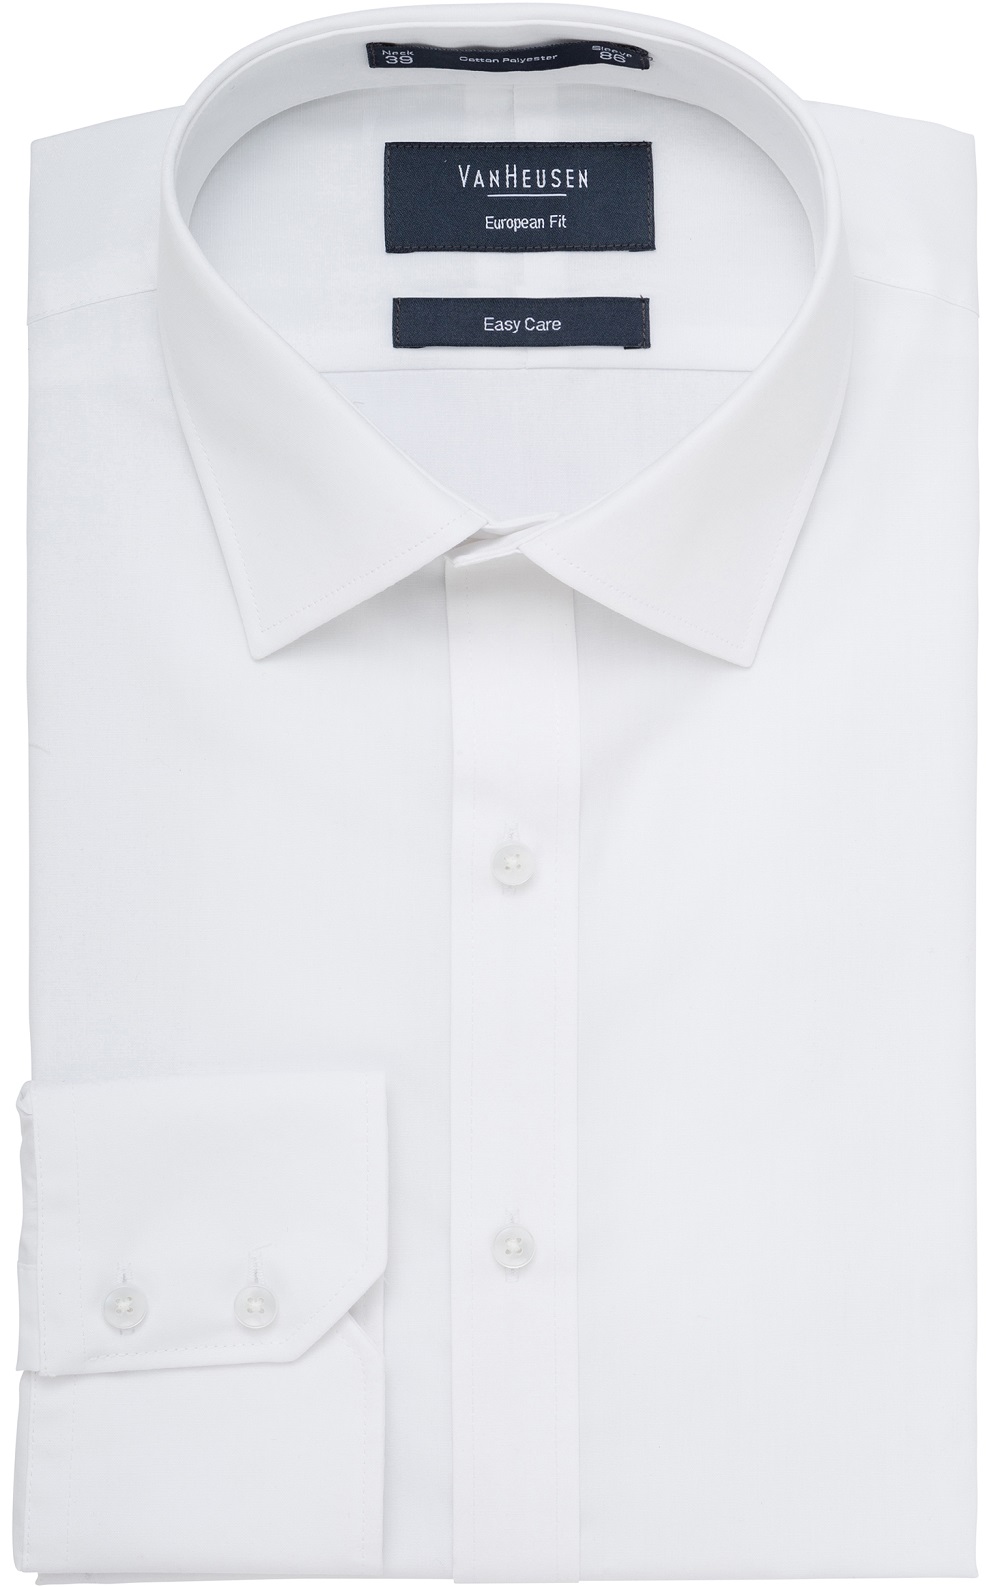 White Shirt European Fit Business Shirt Van Heusen Save up to 25%